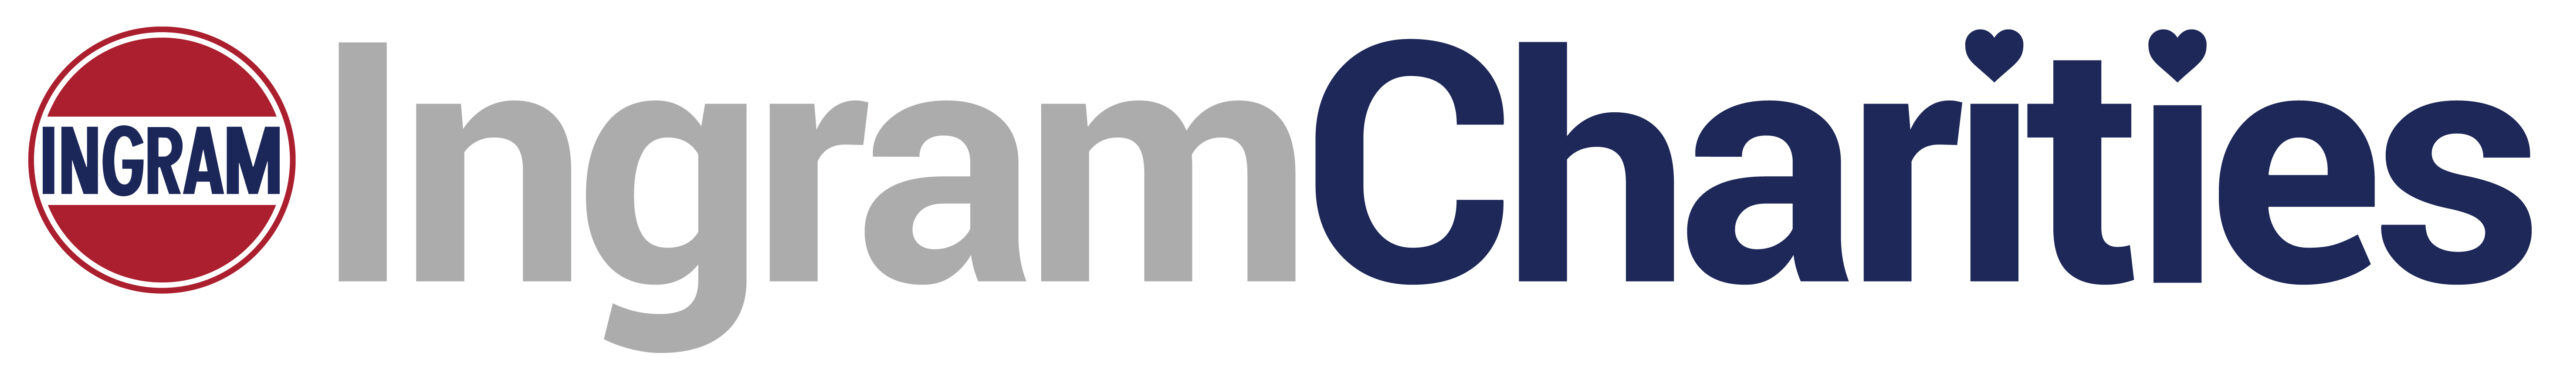 2016 Colors - Ingram logo-vector-CMYK